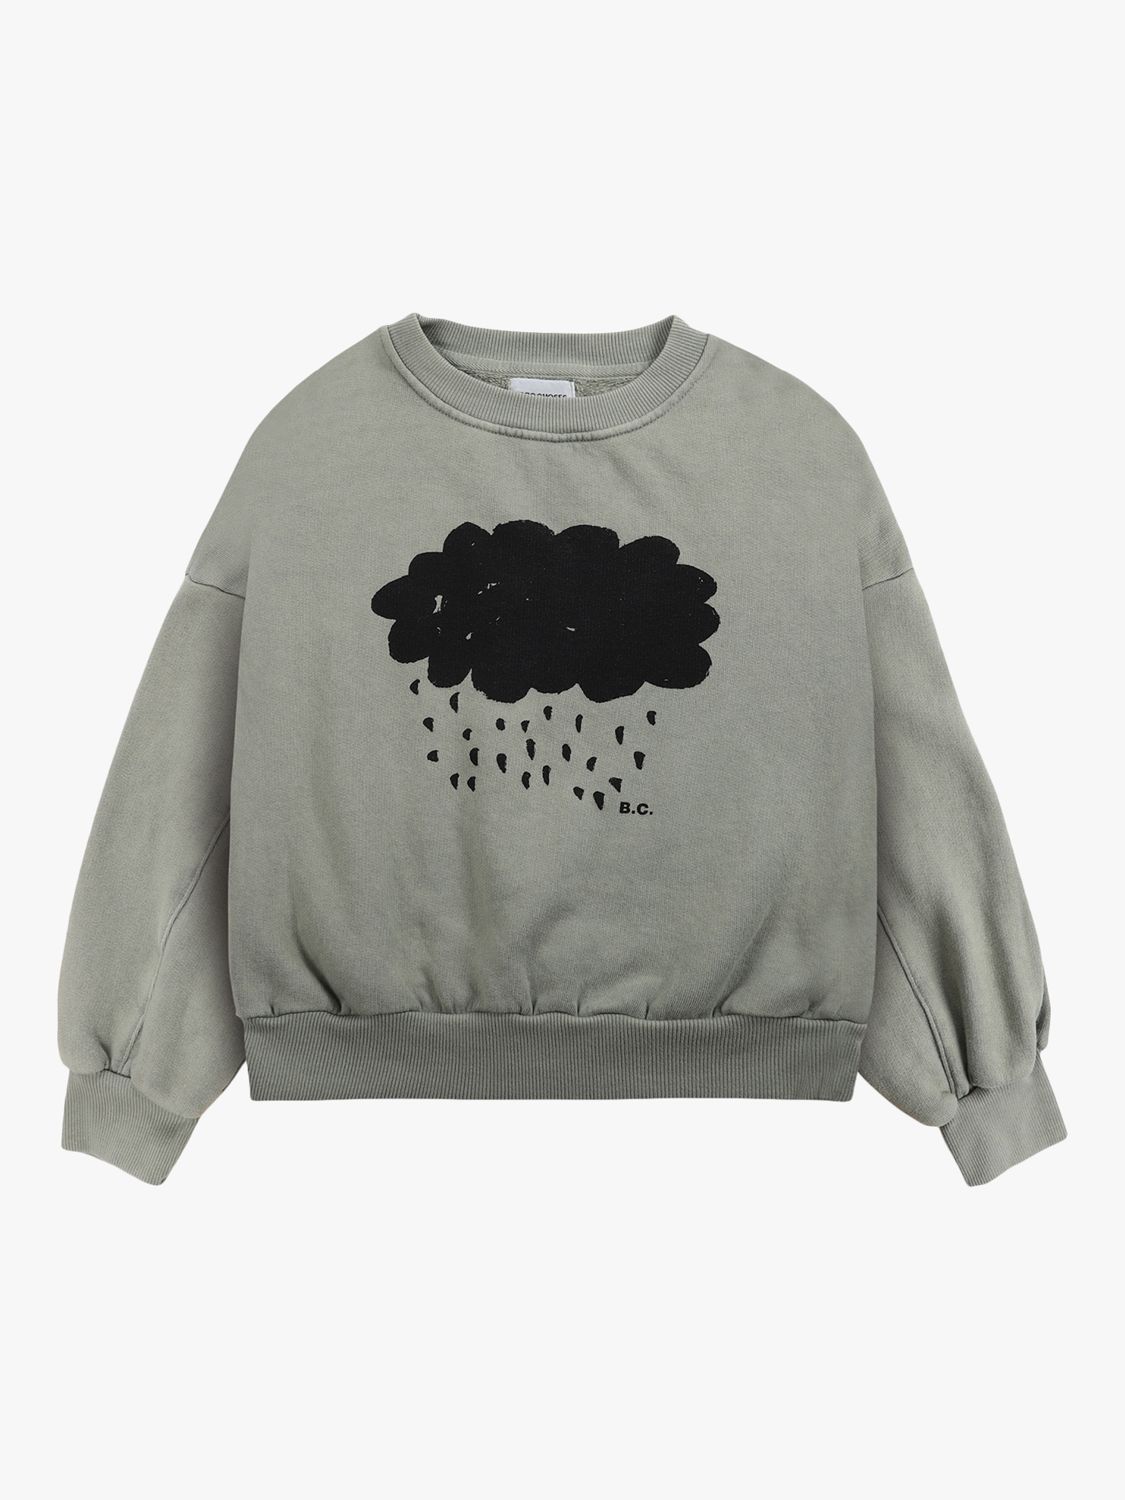 Bobo Choses Kids' Organic Cotton Blend Cloud Sweatshirt, Khaki, 2-3 years